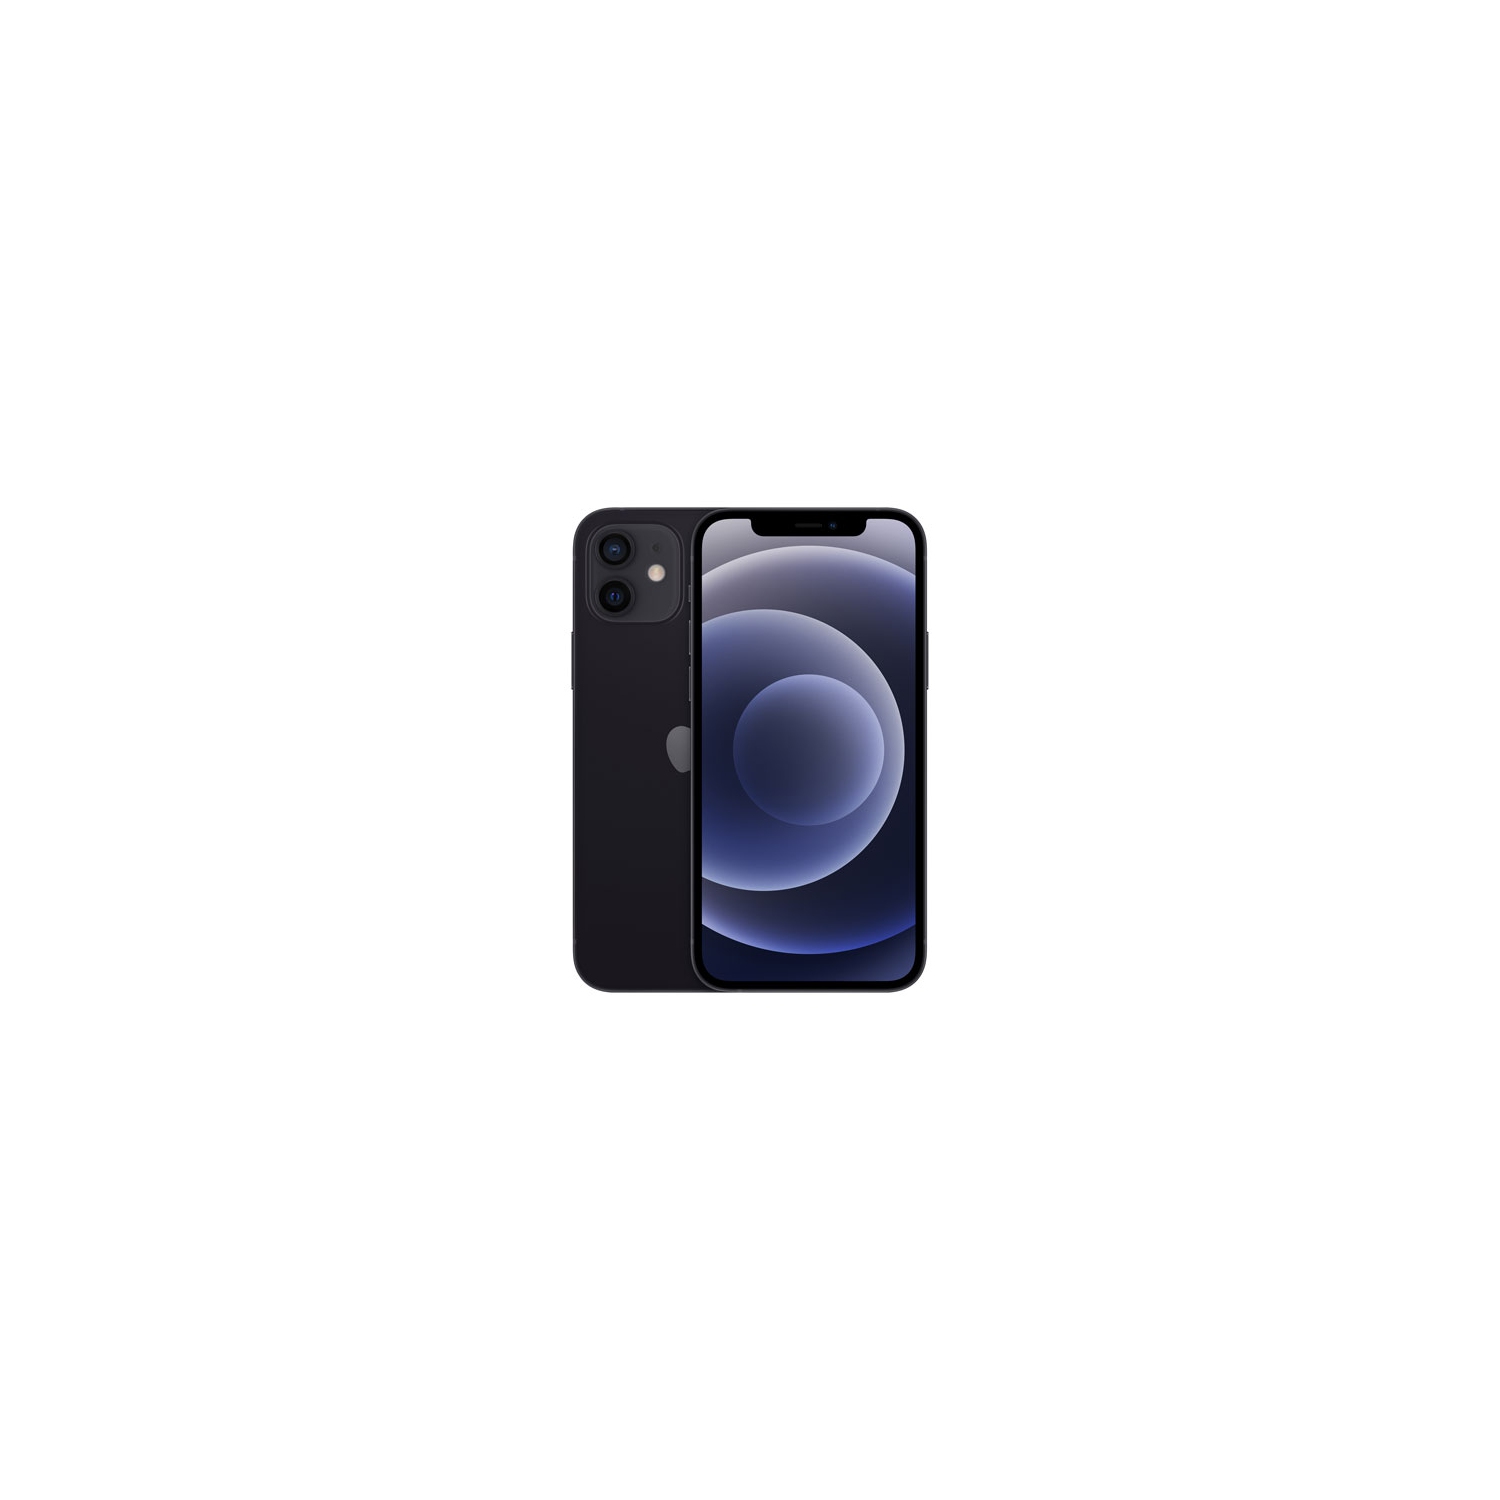 Refurbished (Excellent) - Apple iPhone 12 64GB Smartphone - Black - Unlocked - Certified Refurbished